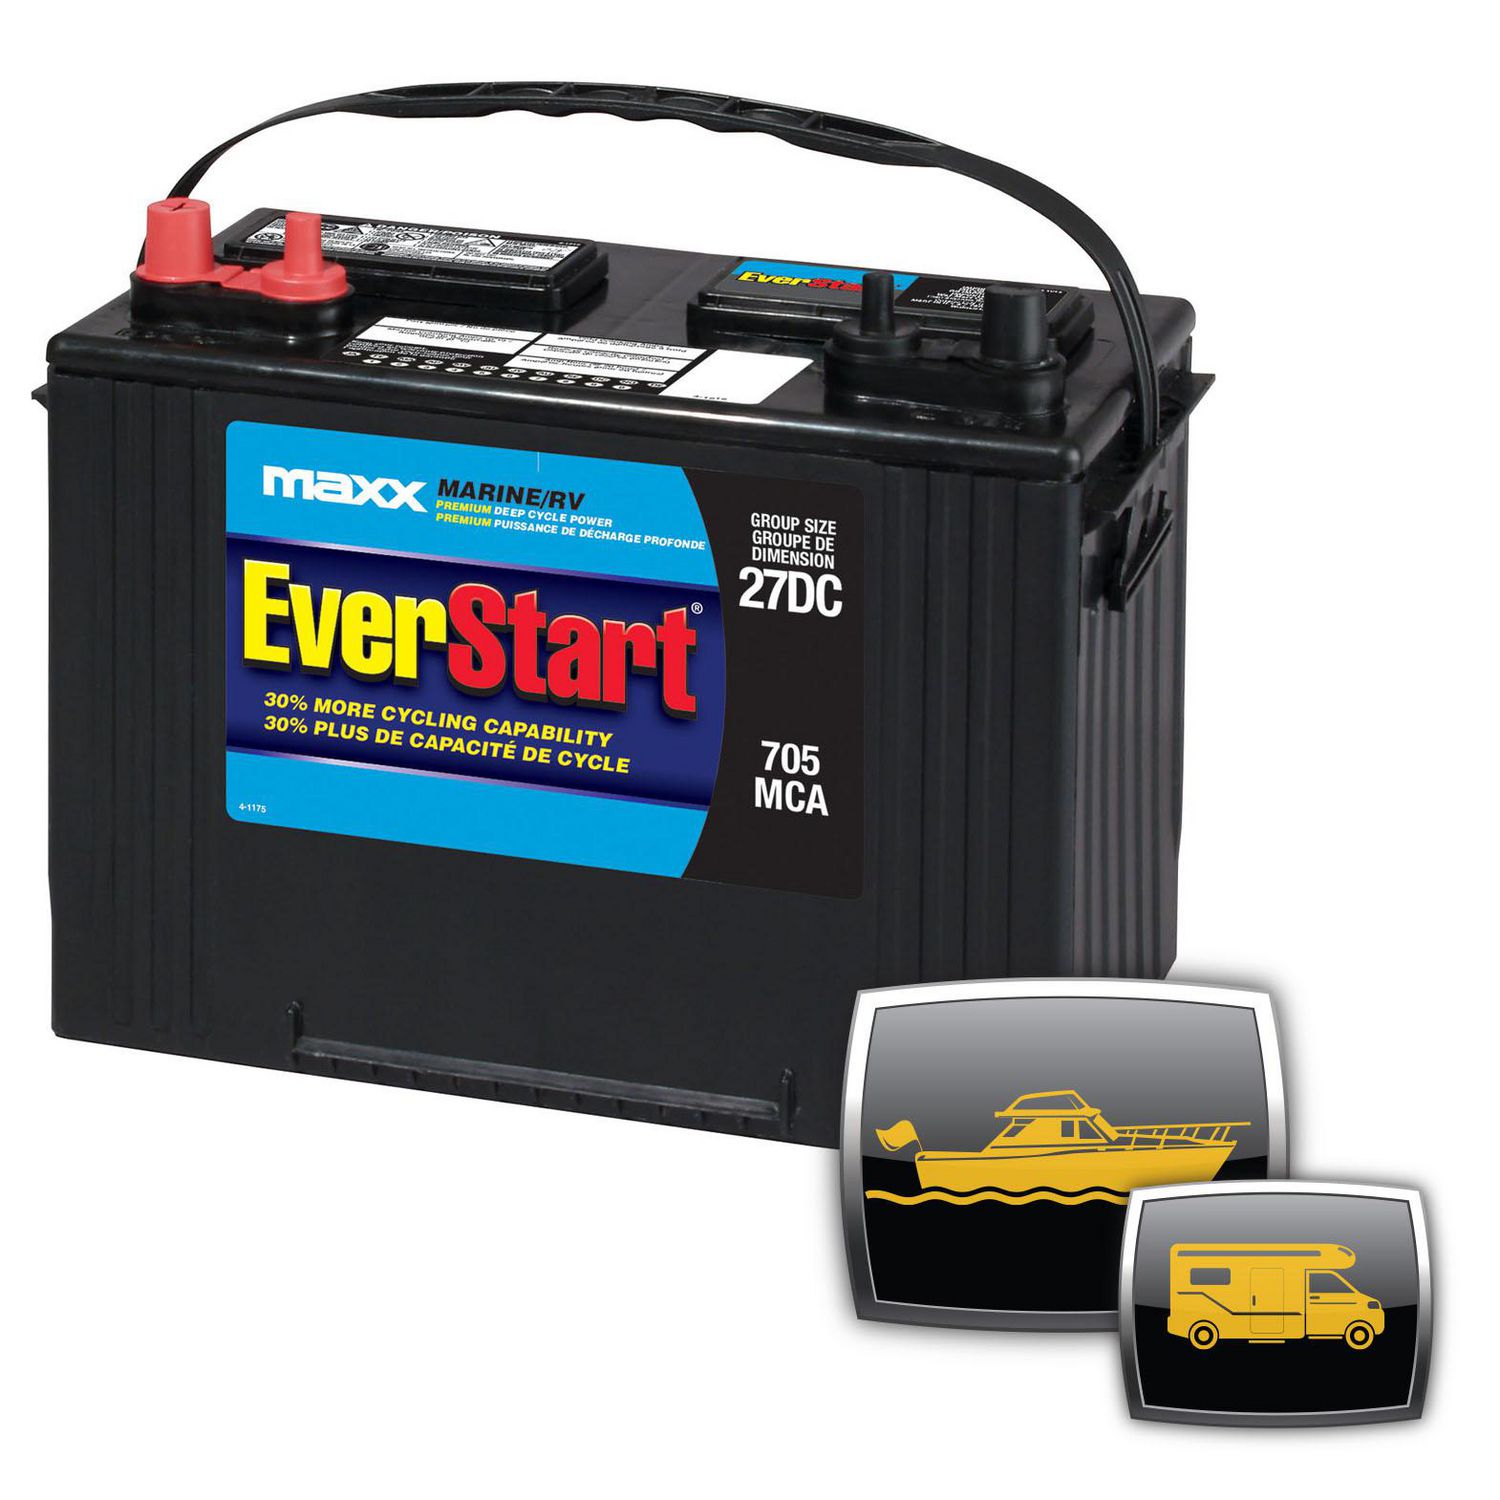 everstart maxx marine battery